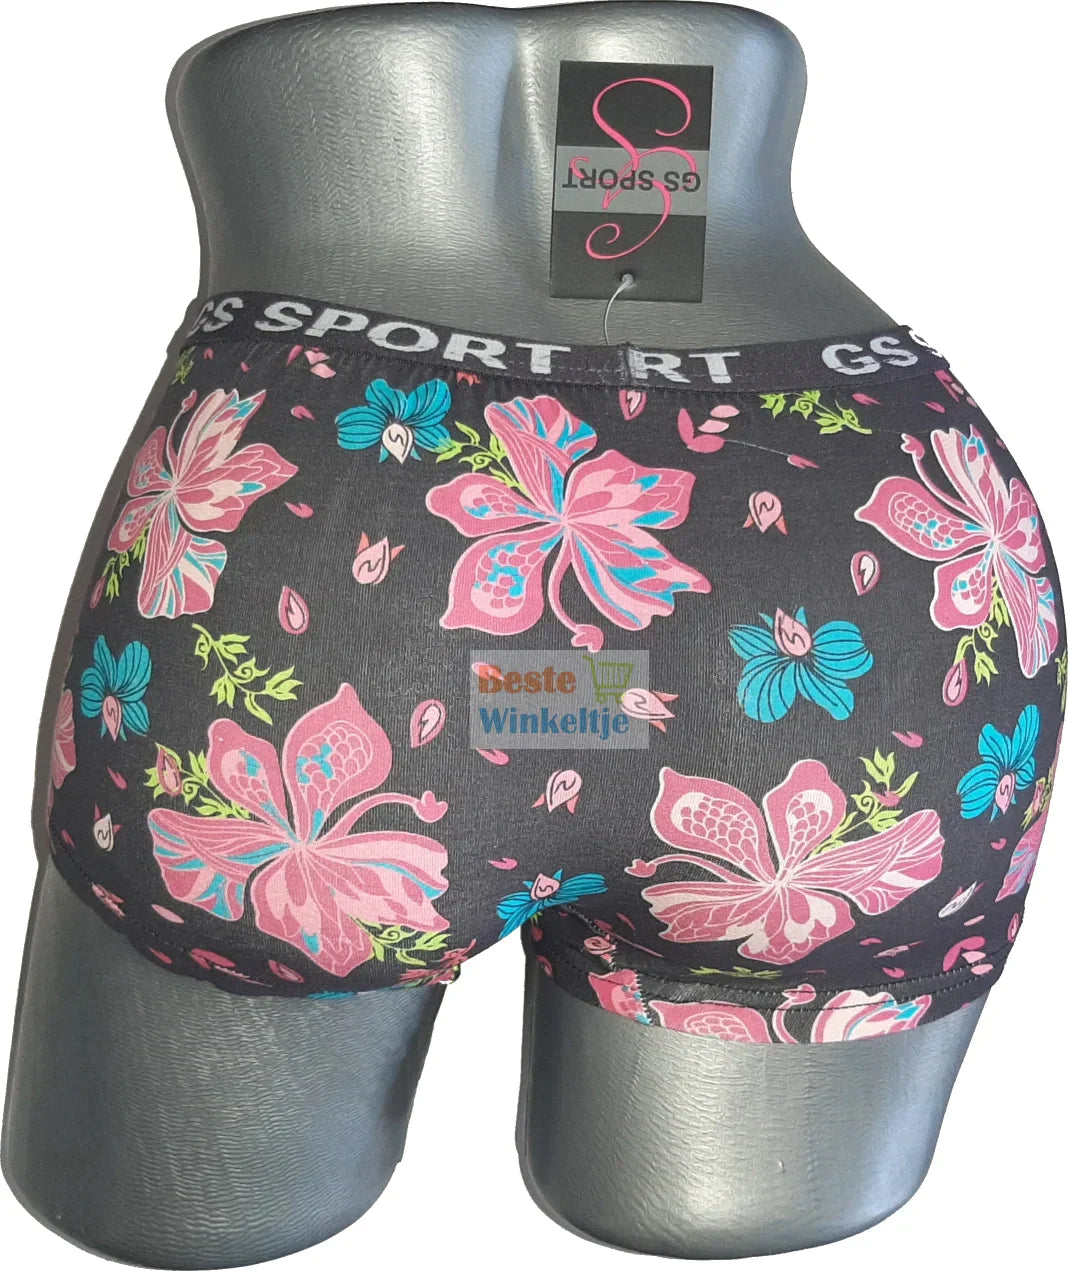 2 pack GS Sport Dames Print Zwart/Roze - boxershort